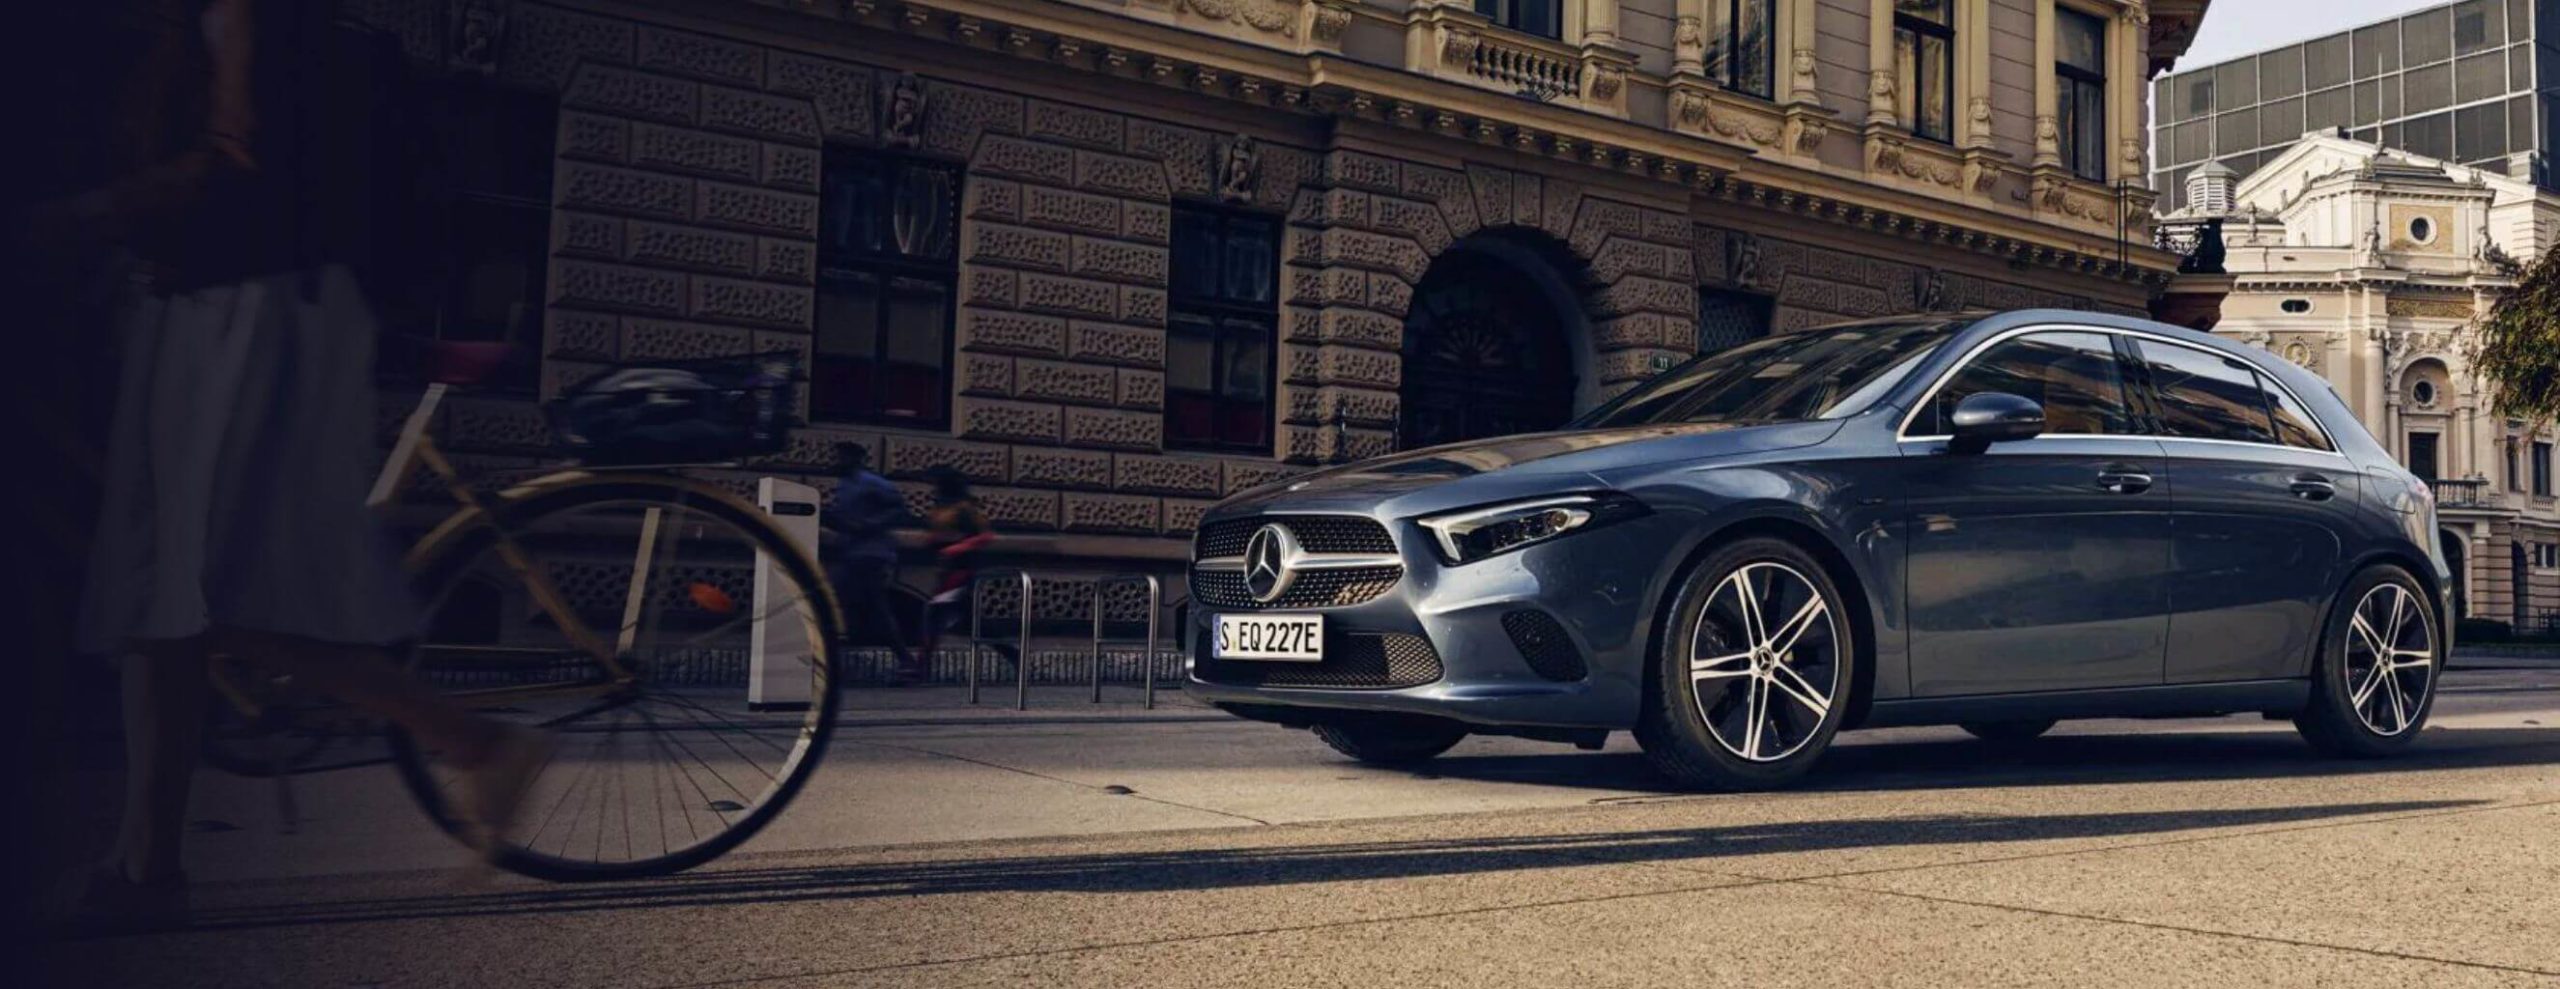 Oferta Mercedes-benz plug-in hybrid - auto schunn